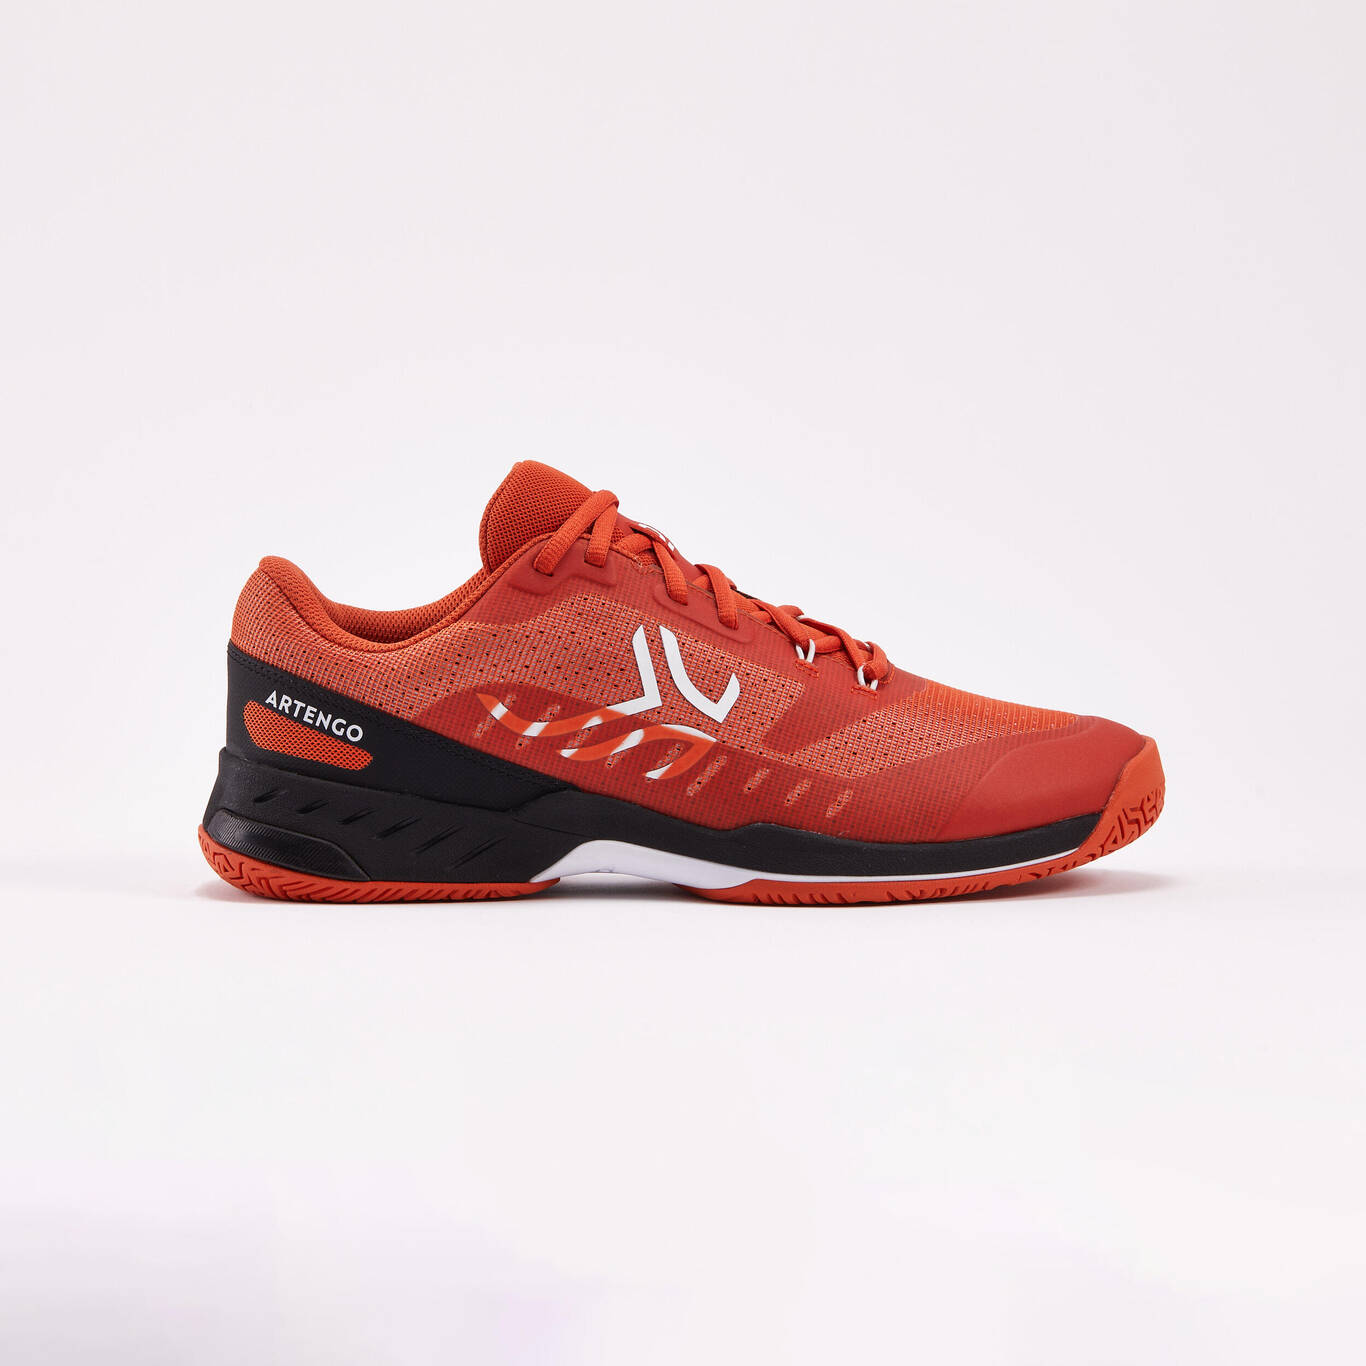 Men's Multicourt Tennis Shoes Fast - Terracotta Red/Black